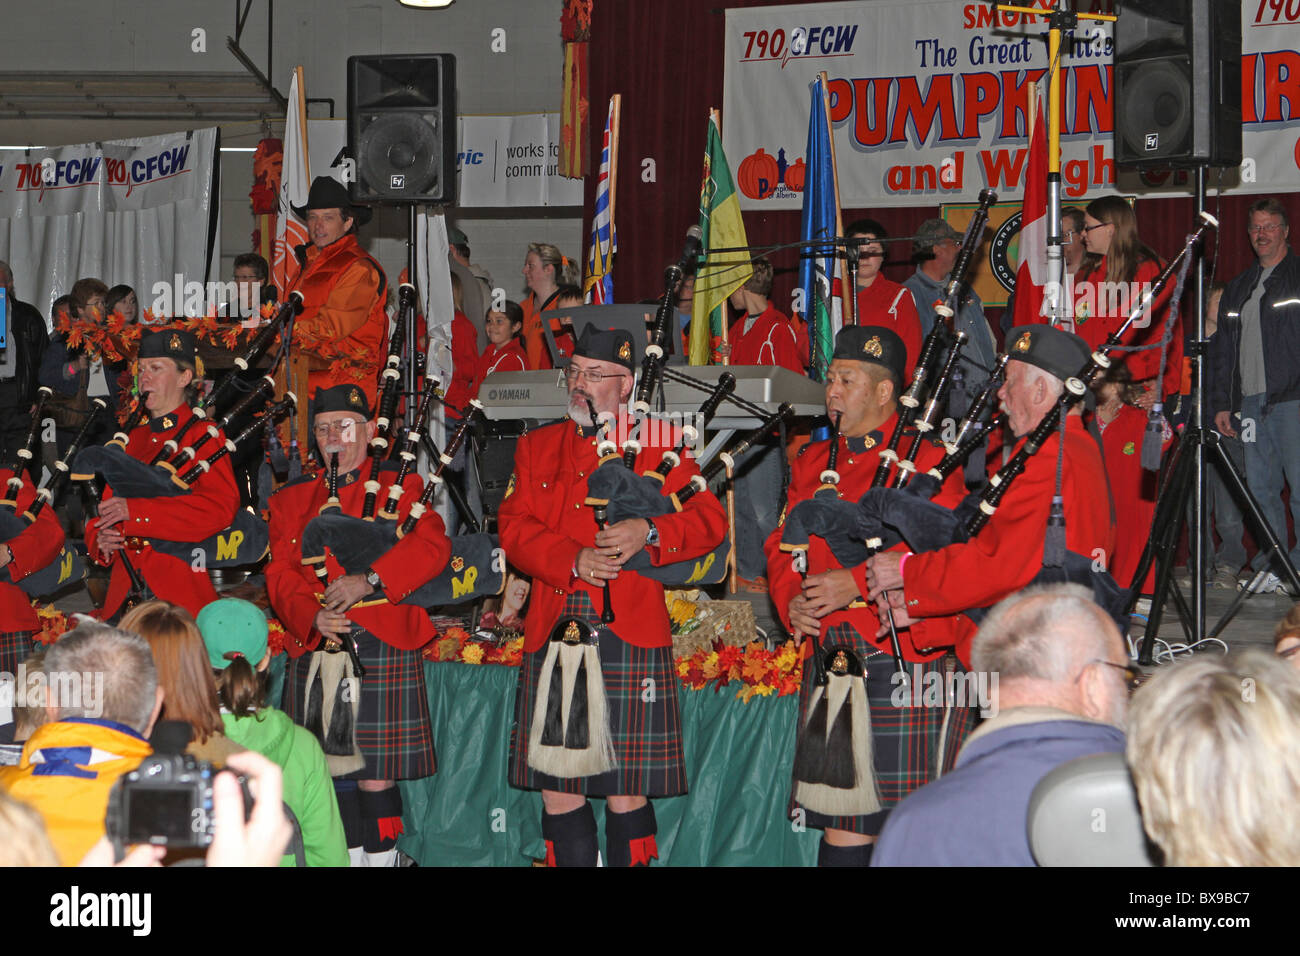 Highland band in Smokey Lago, Alberta, Canada Foto Stock